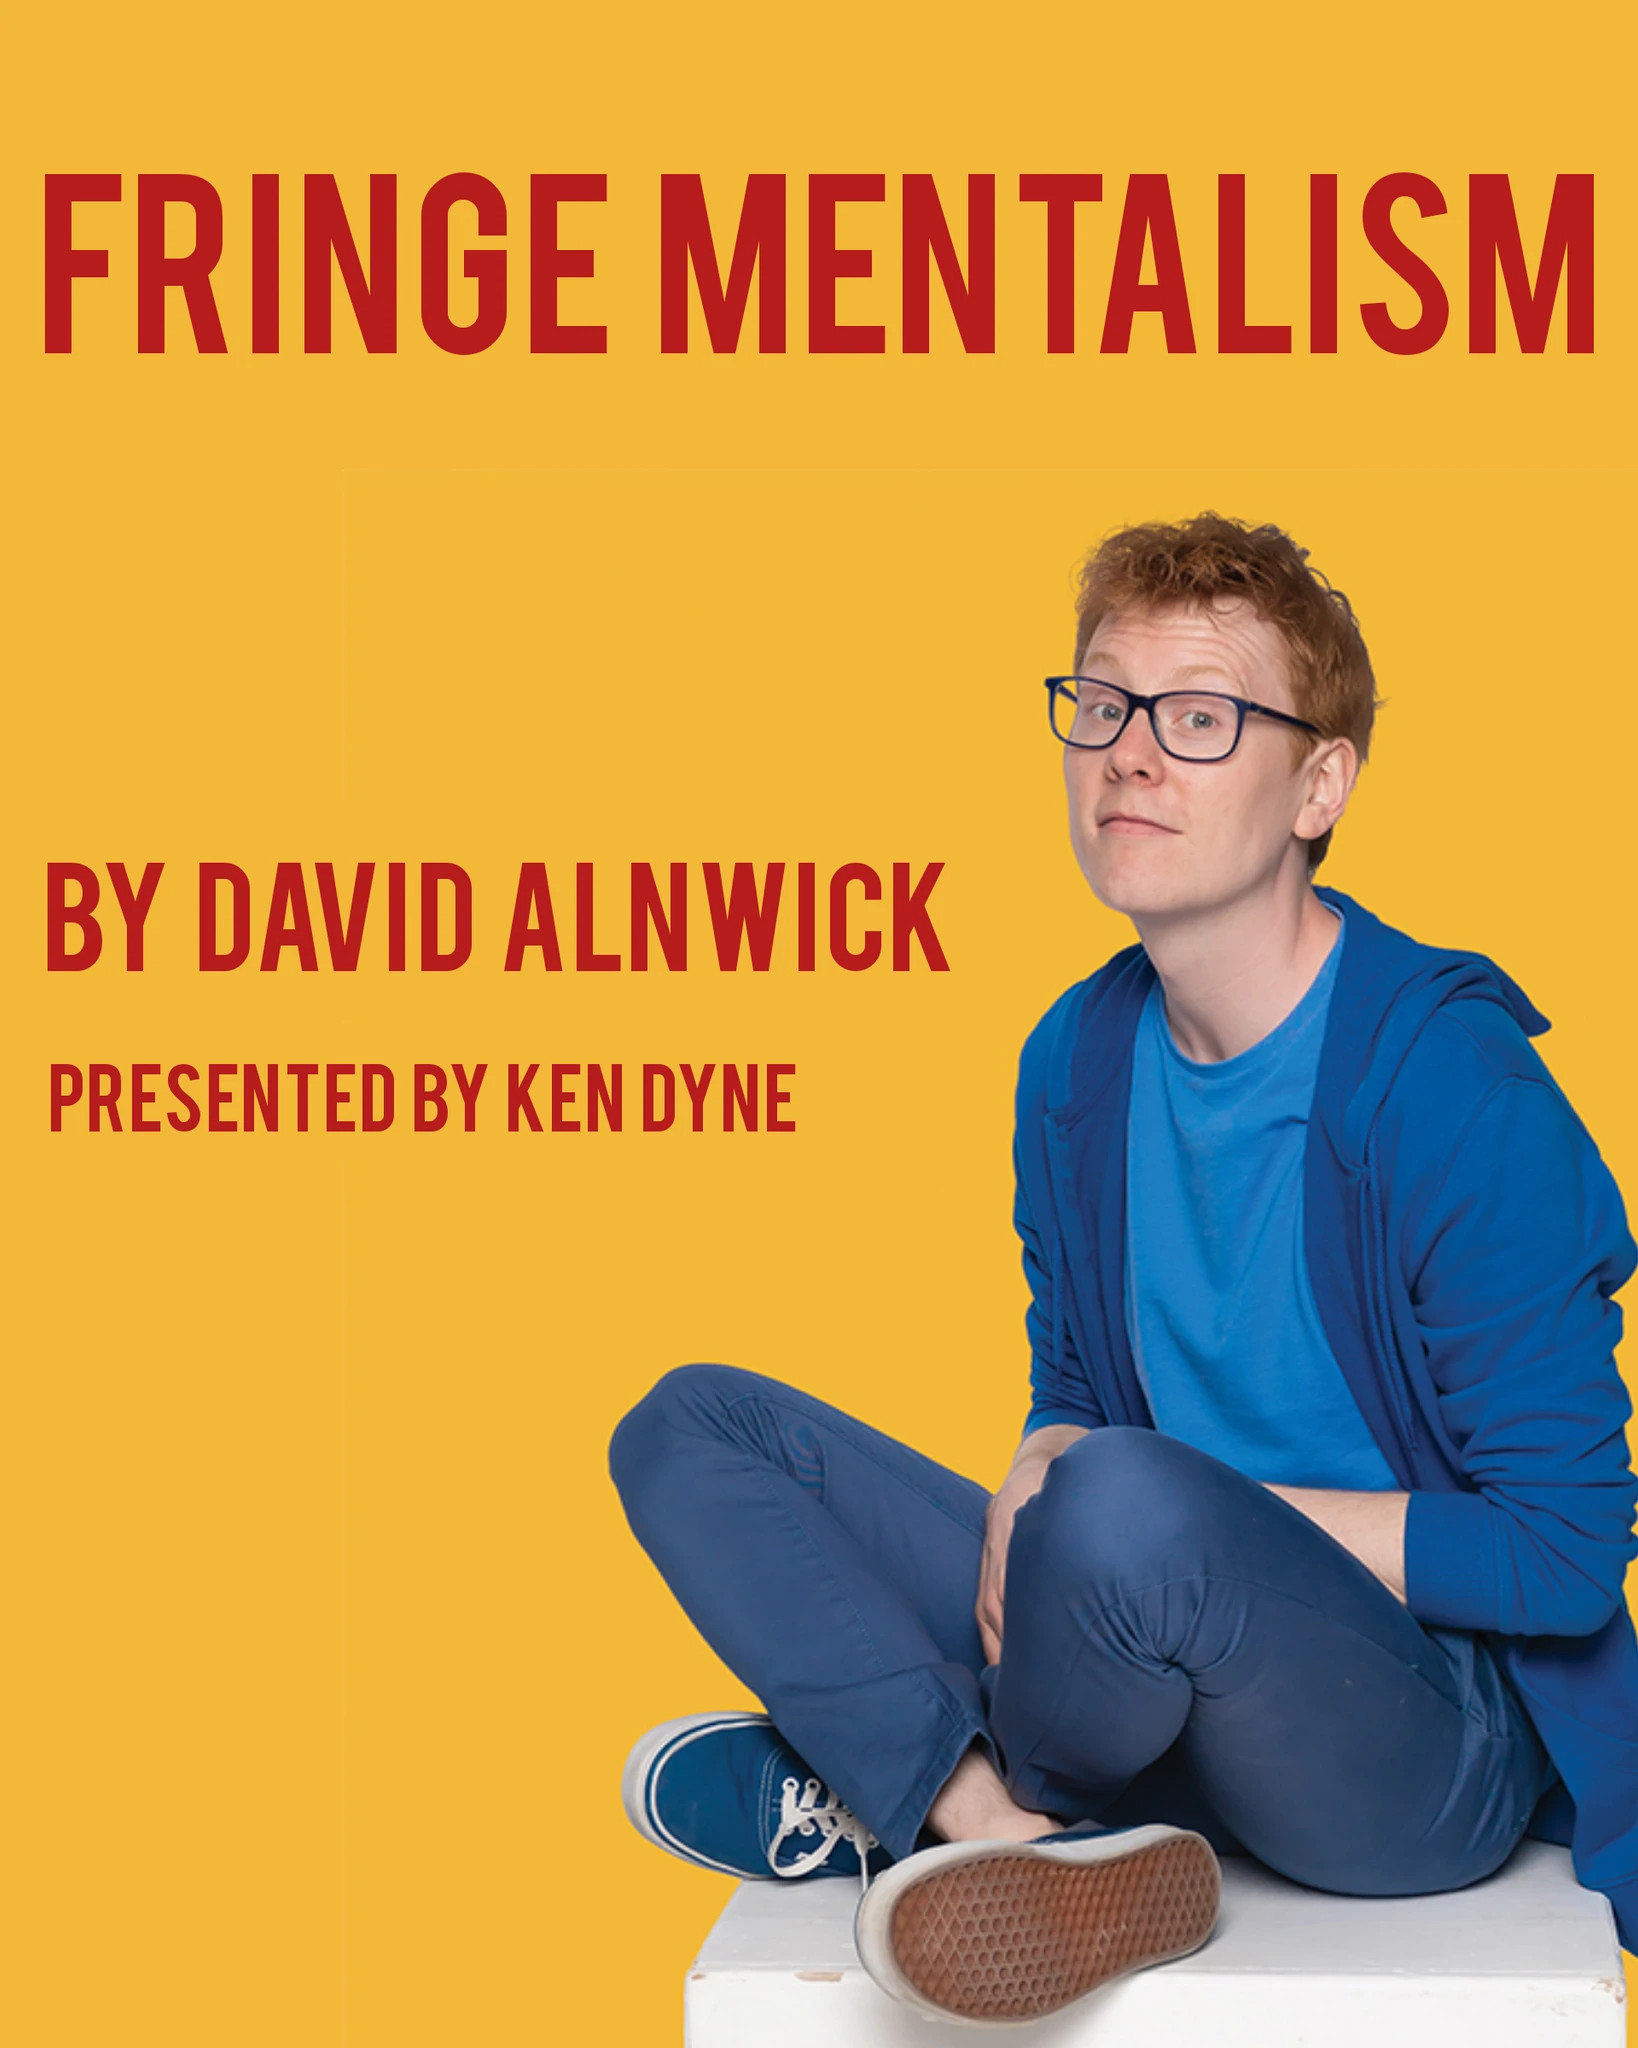 David Alnwick - Fringe Mentalism (Presented by Ken Dyne)